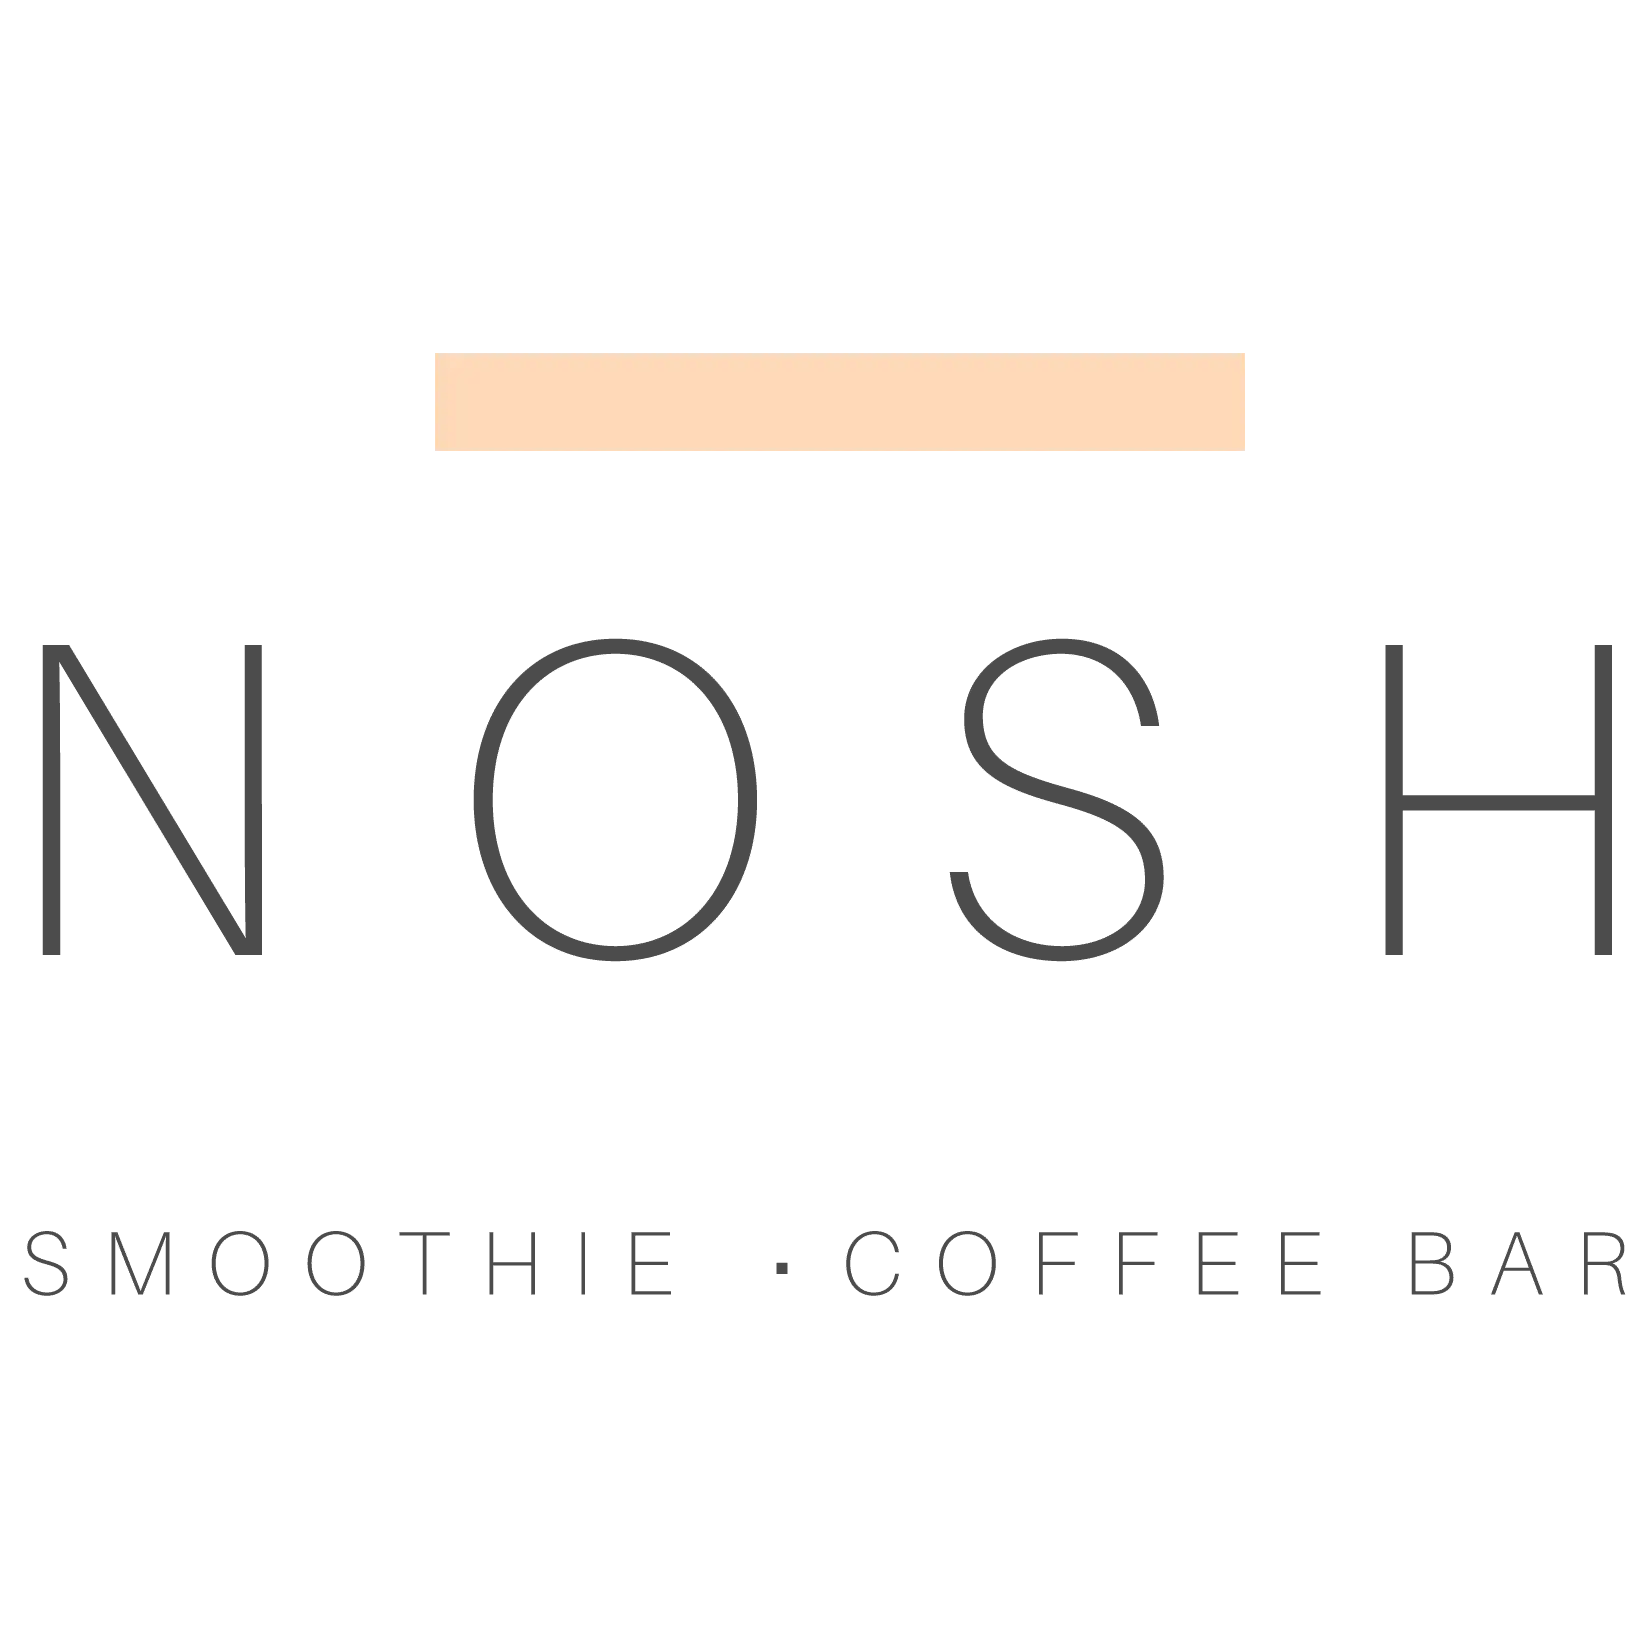 Nosh coffee bar logo app